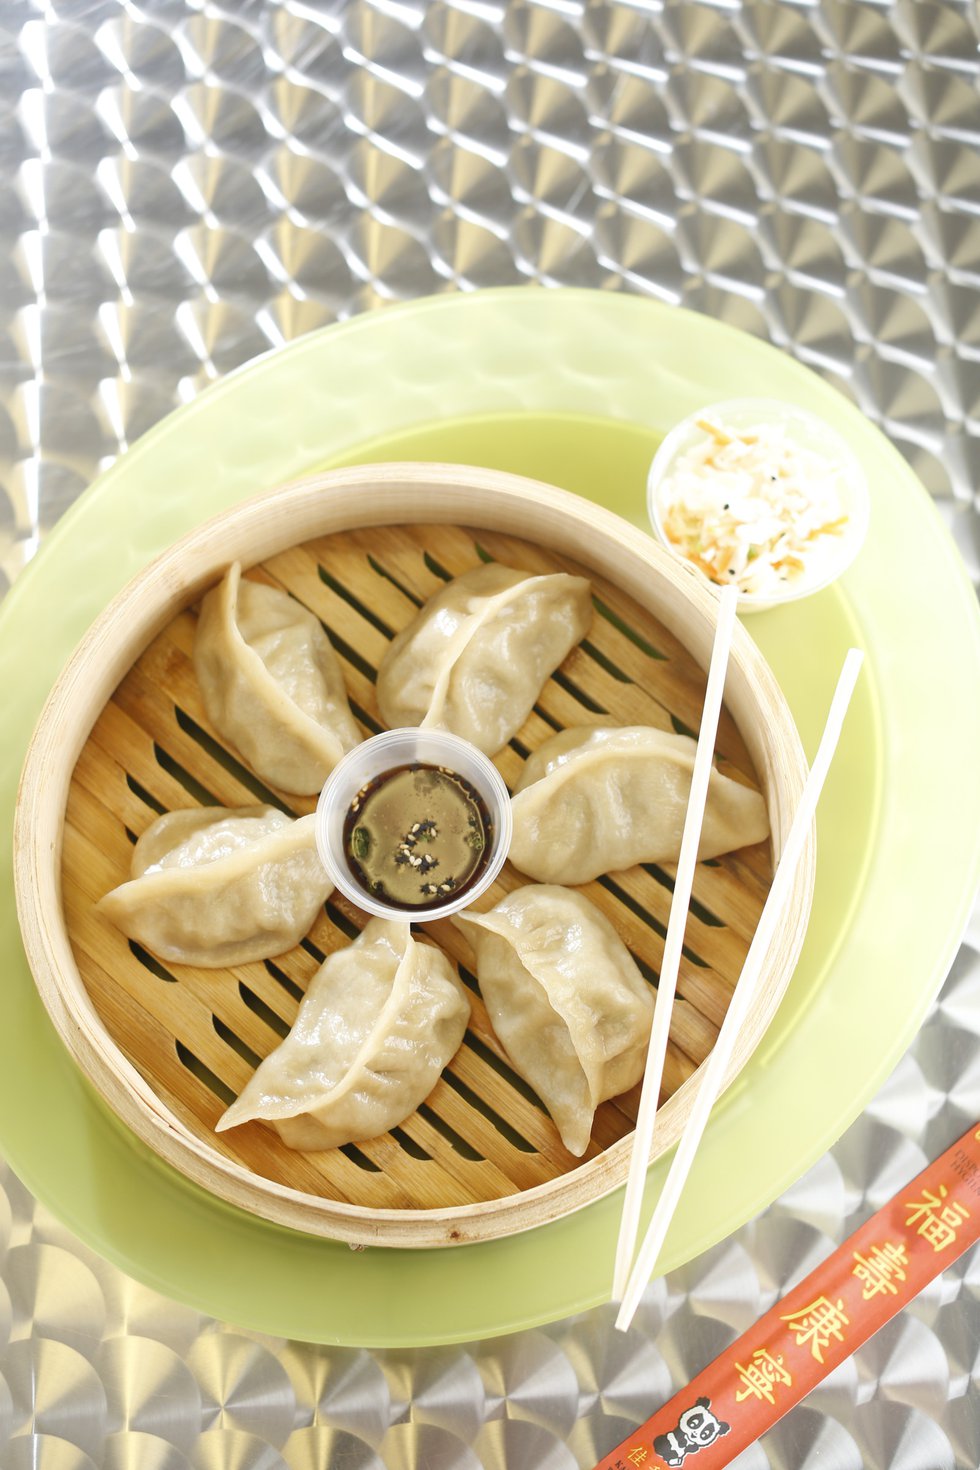 4Dumplings: Pork and napa cabbage dumplings are the restaurant’s most popular.